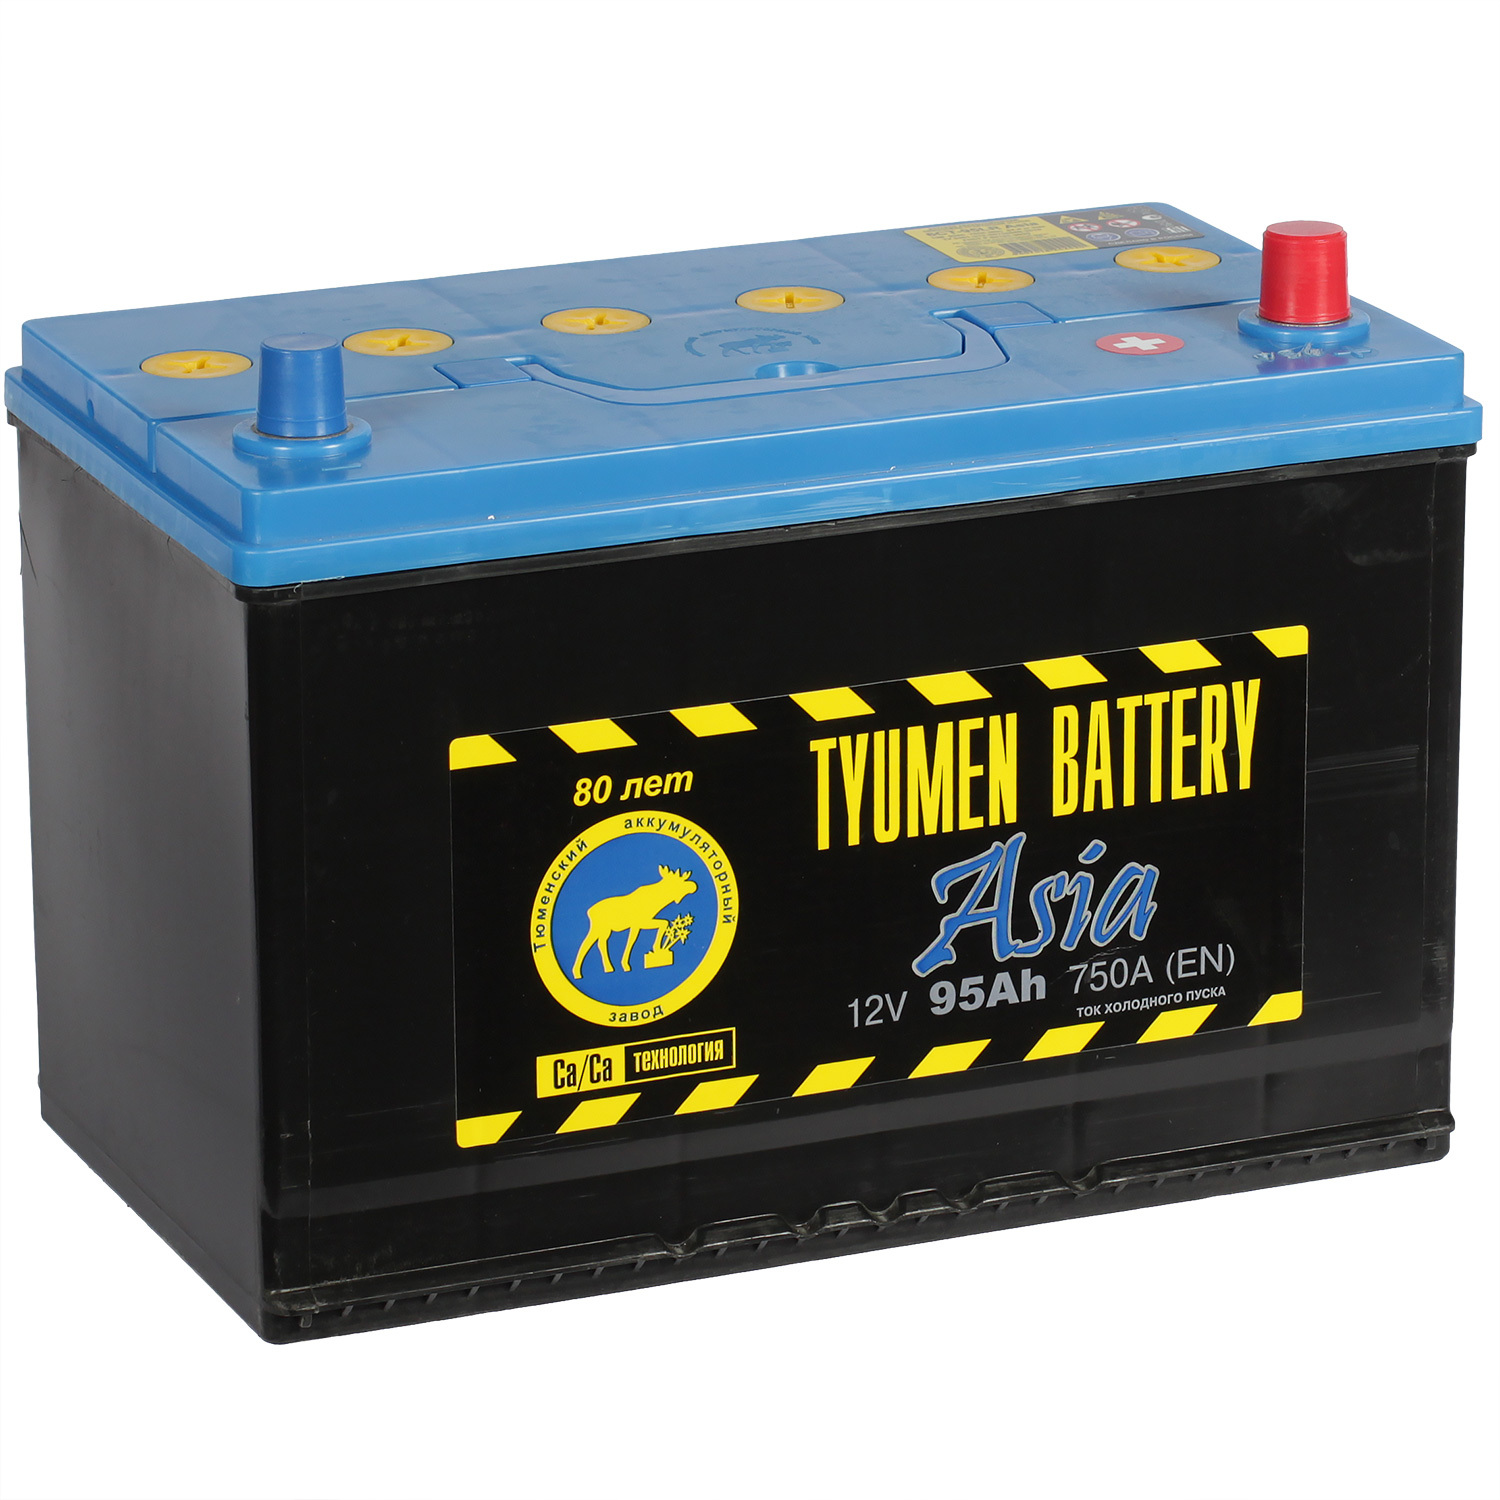 Tyumen Battery Автомобильный аккумулятор Tyumen Battery 95 Ач обратная полярность D31L space автомобильный аккумулятор space 110 ач обратная полярность d31l